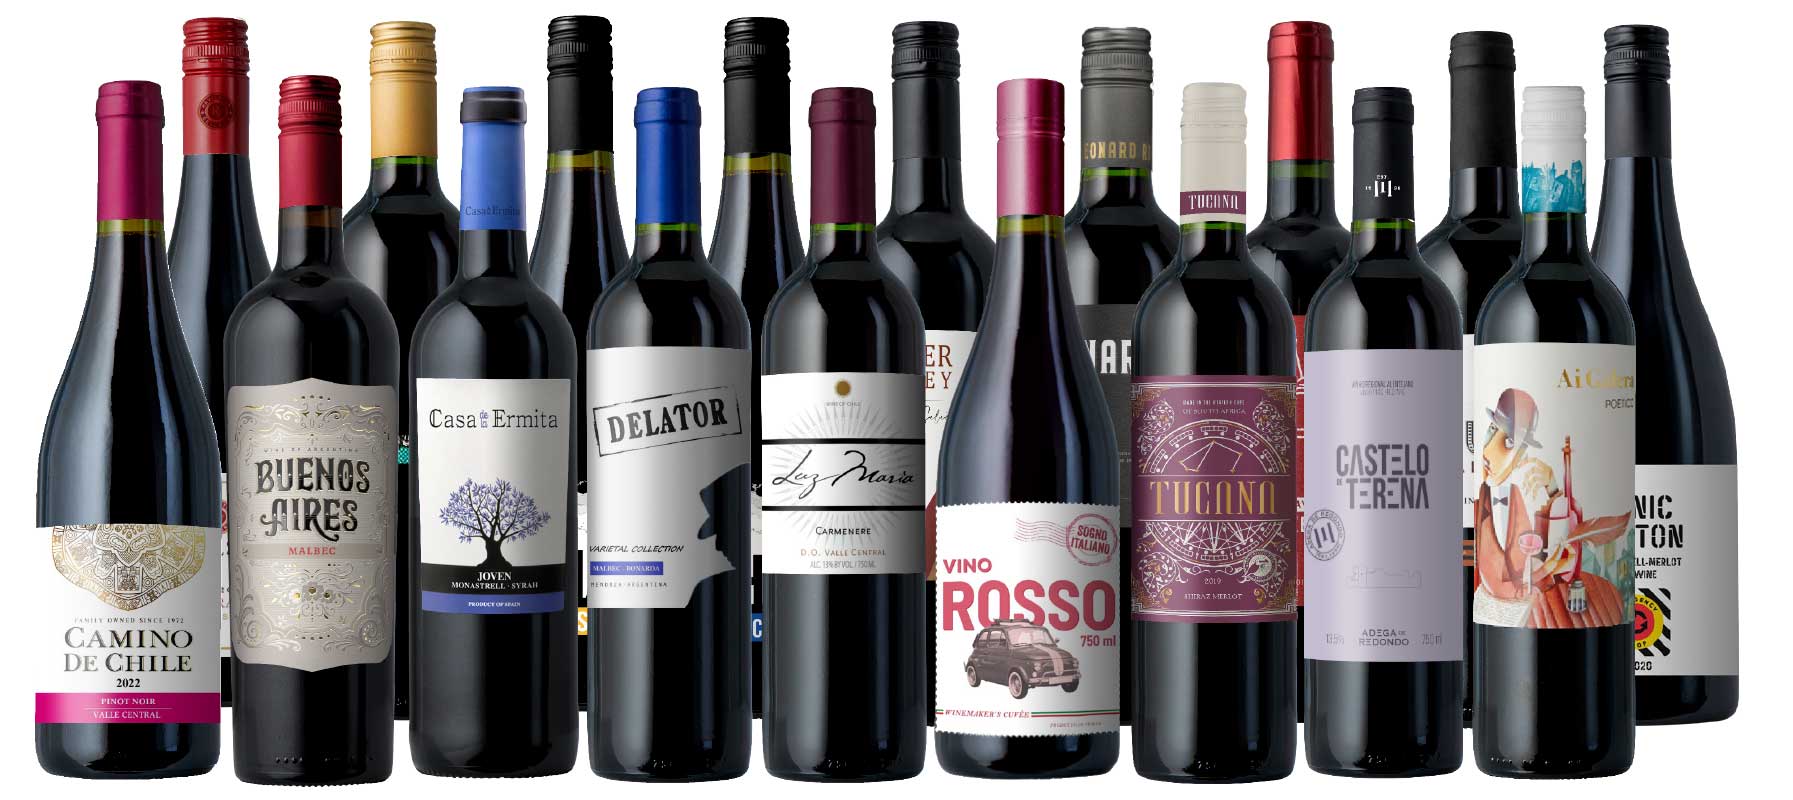 UPGRADE: The Biggest Vineyard Red Wine Sale EVER 18-Pack